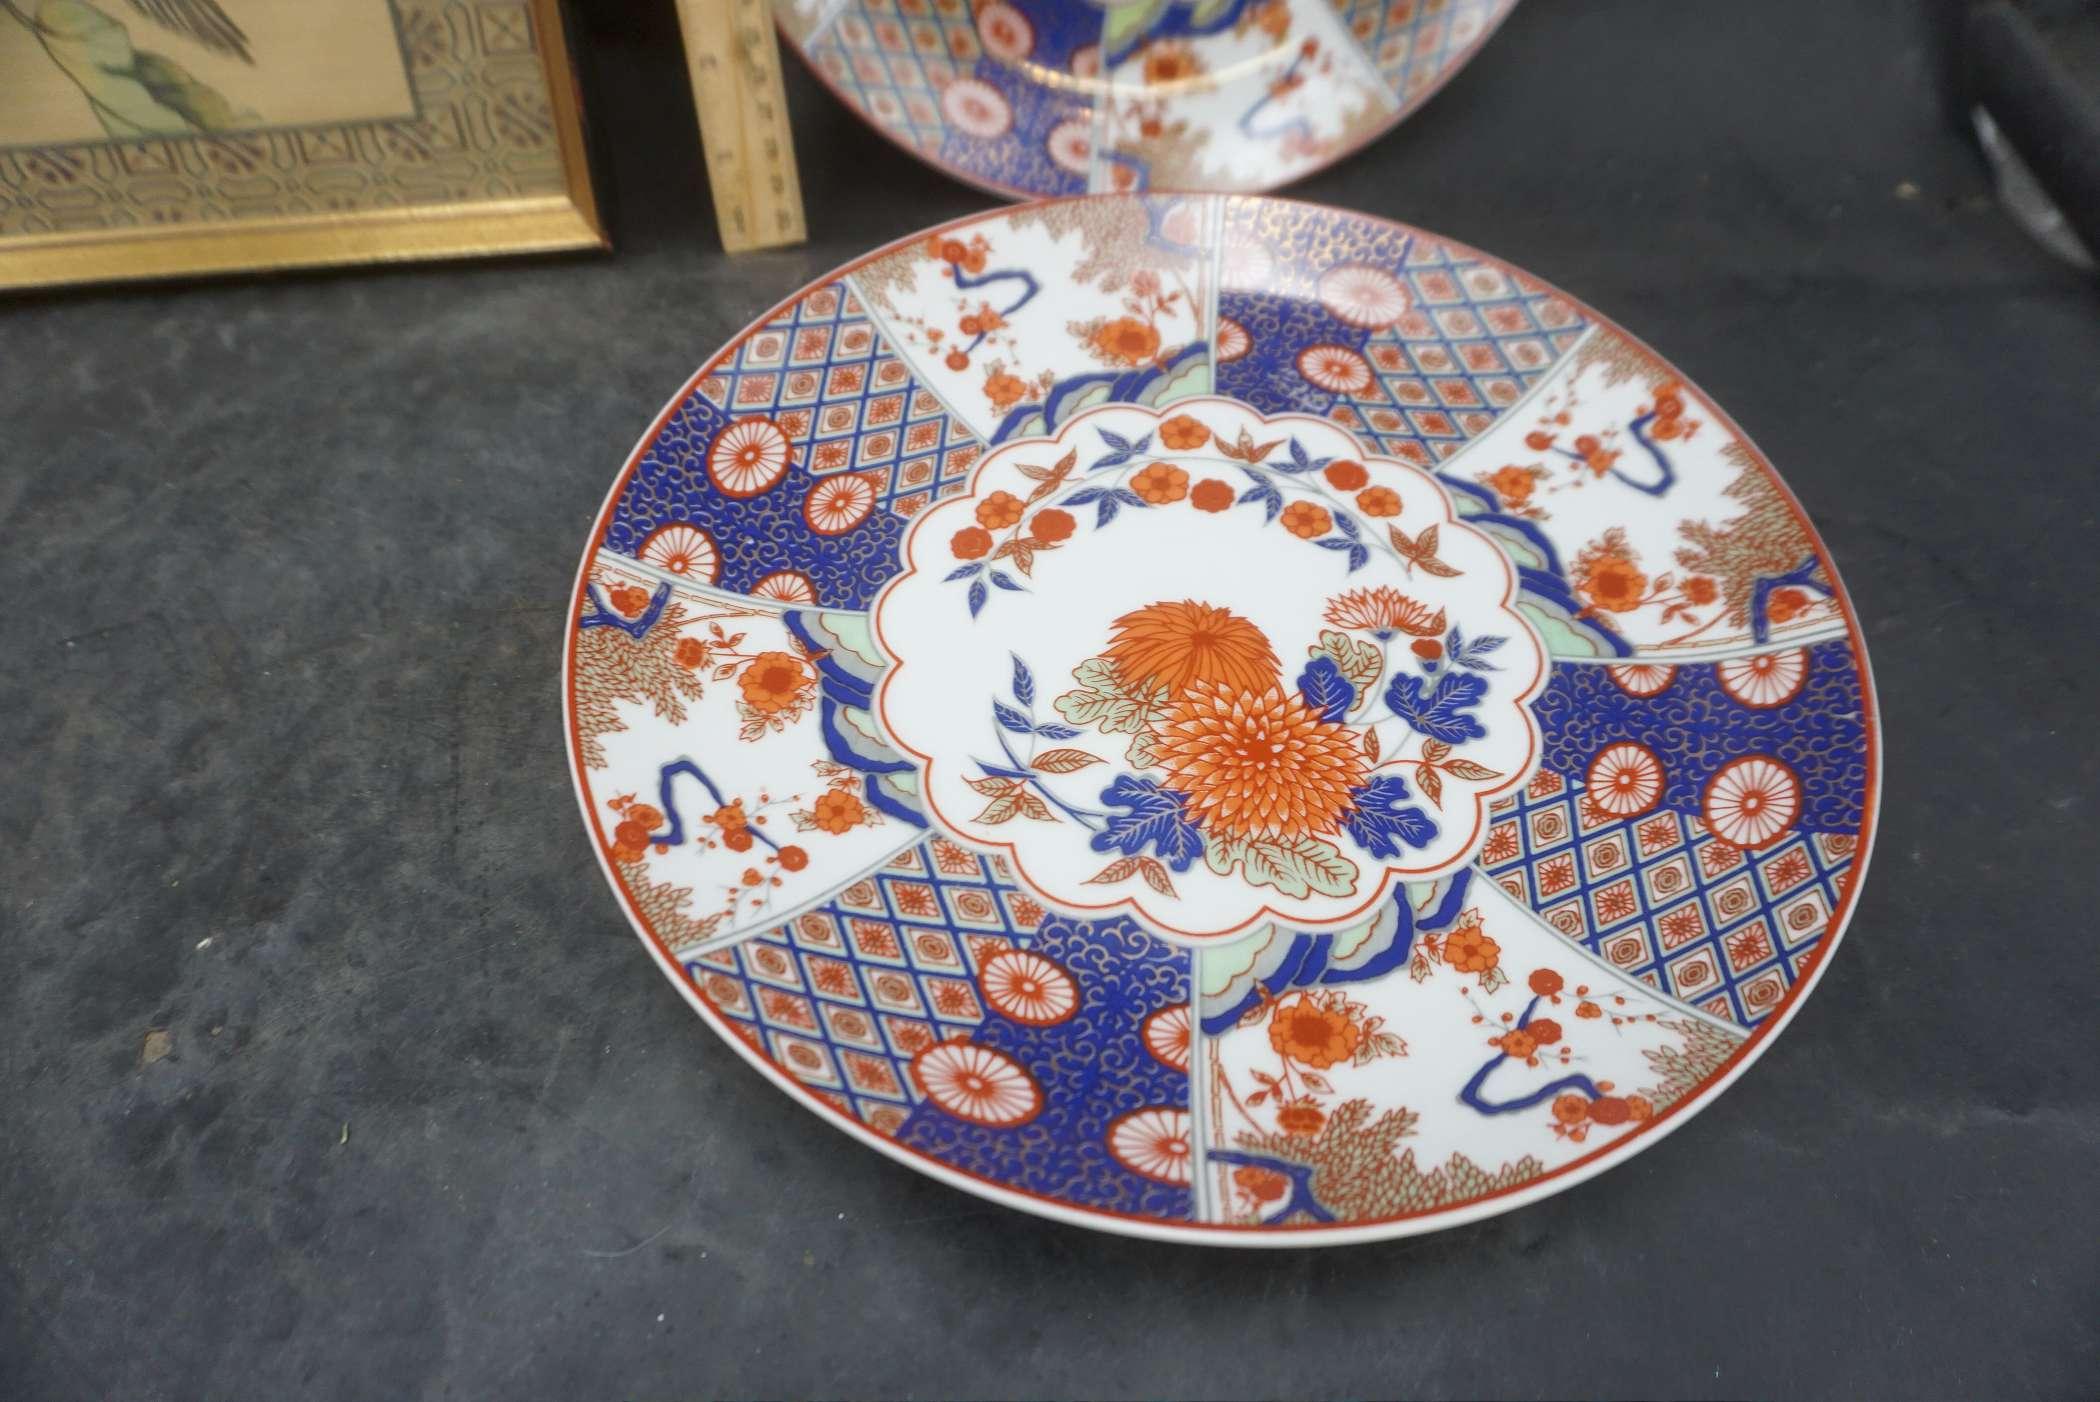 Decorative Japanese Plates & Framed Flower Picture